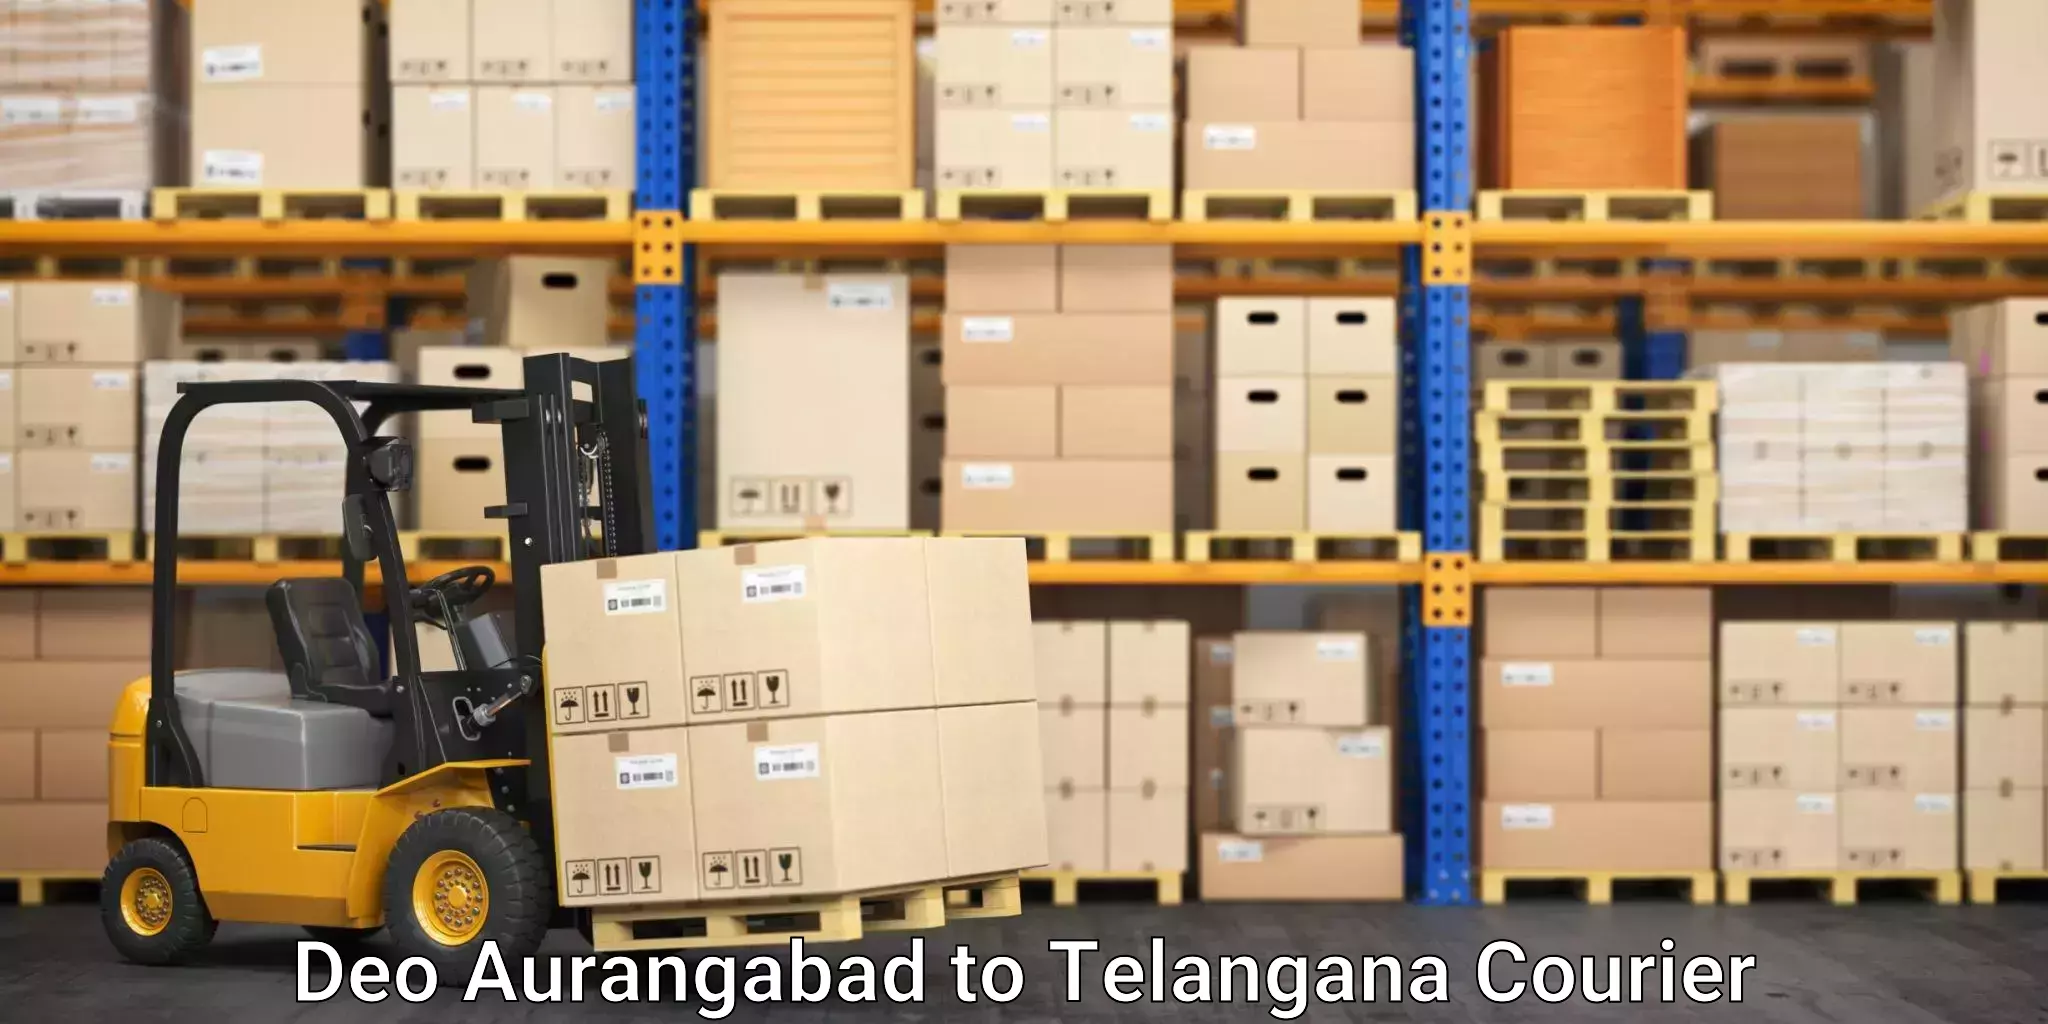 Furniture moving experts Deo Aurangabad to Chandur